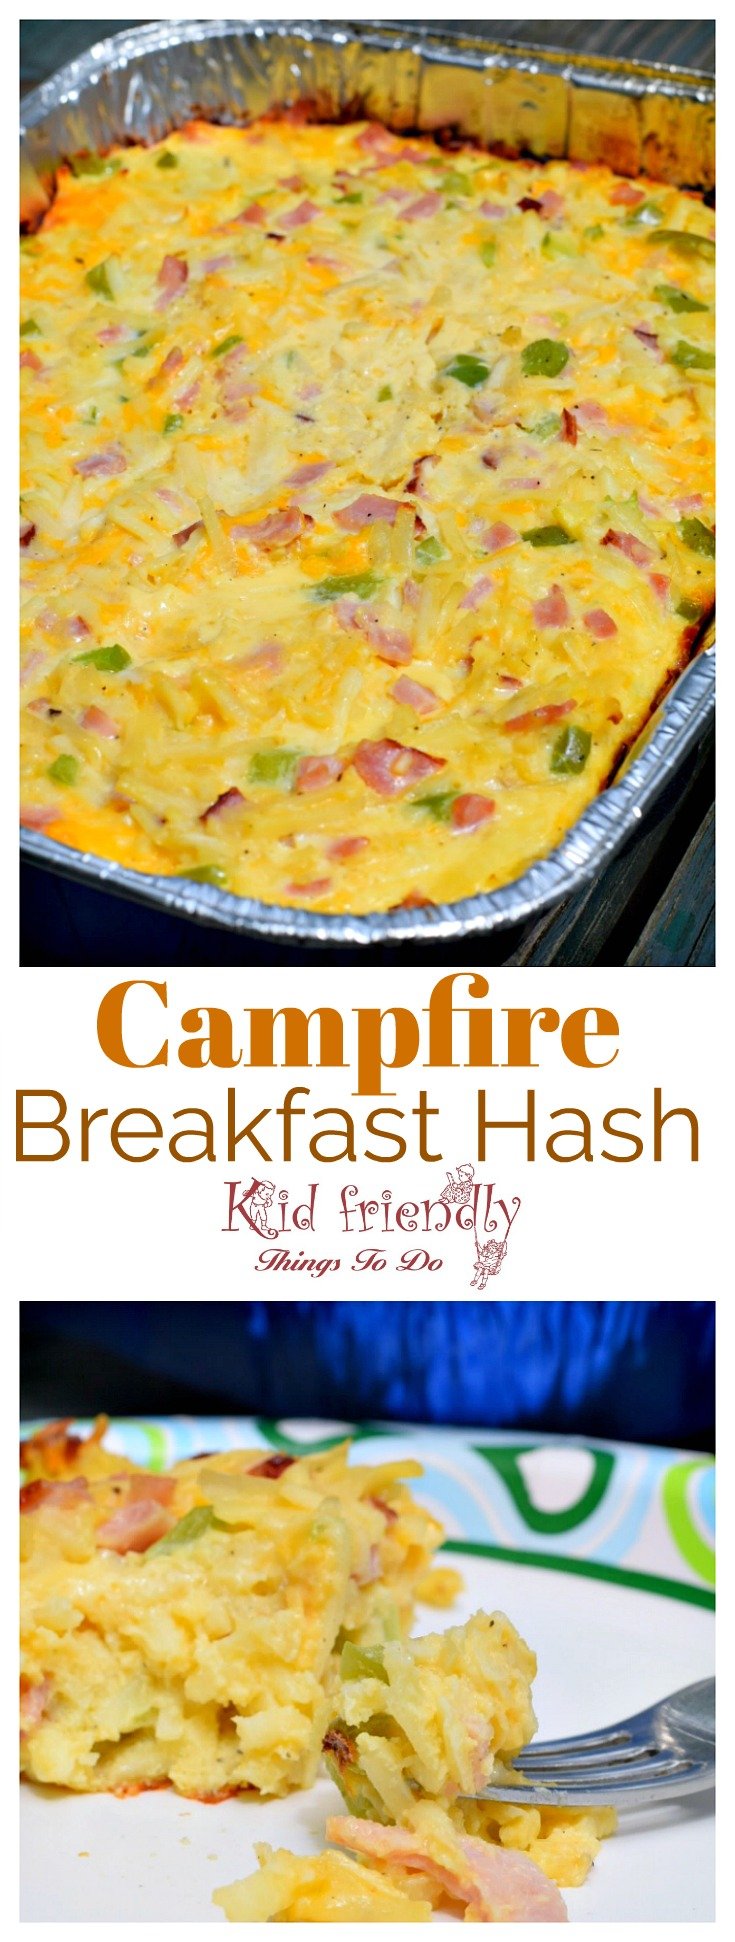 Easy Make Ahead Western Skillet Campfire Breakfast Recipe - Cowboy Breakfast Western Skillet recipe for the camping family breakfast - www.kidfriendlythingstodo.com